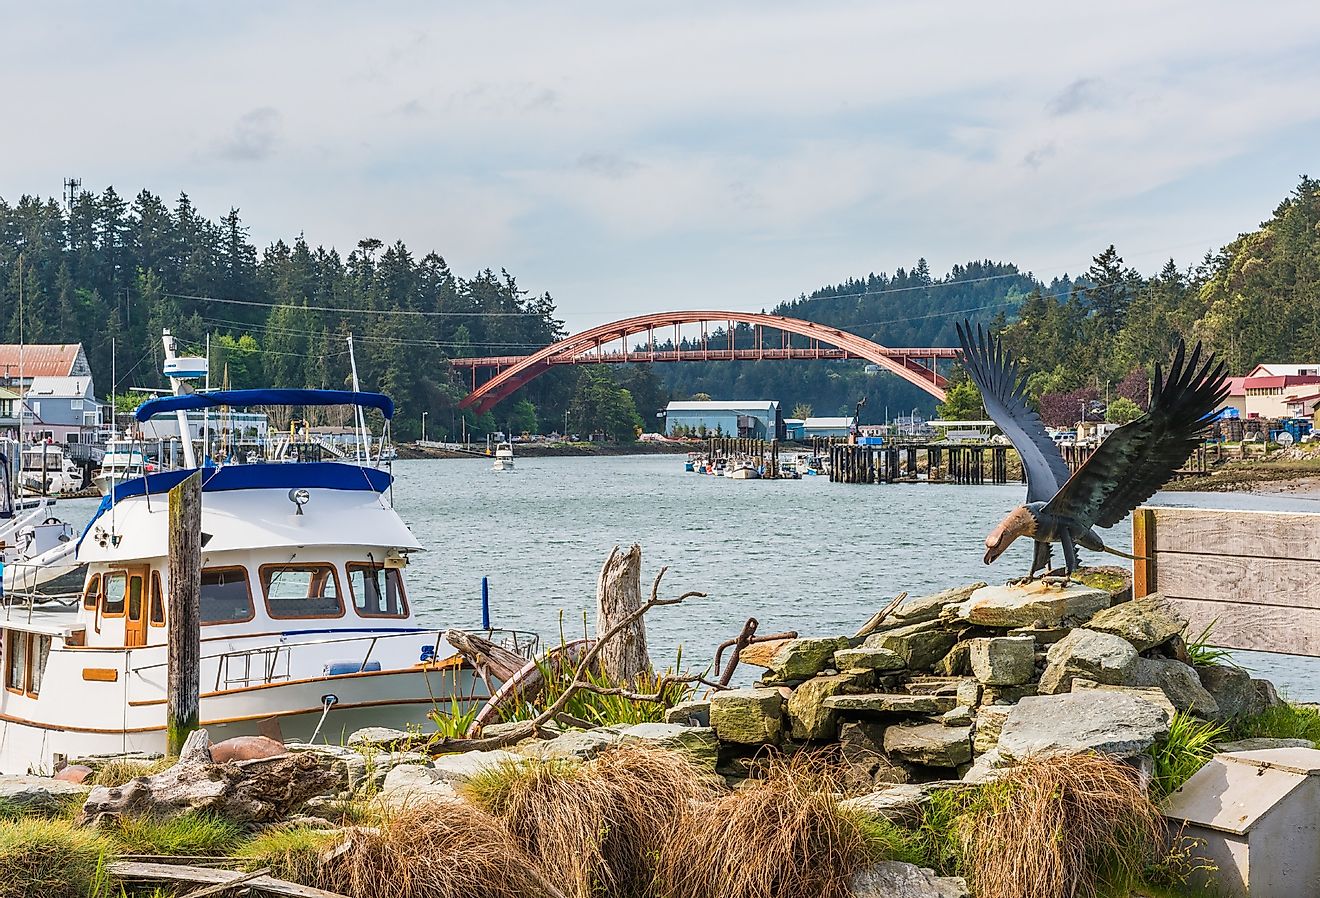 Famous bridge with boats in La Conner, Washington. Image credit Andriy Blokhin via Shutterstock